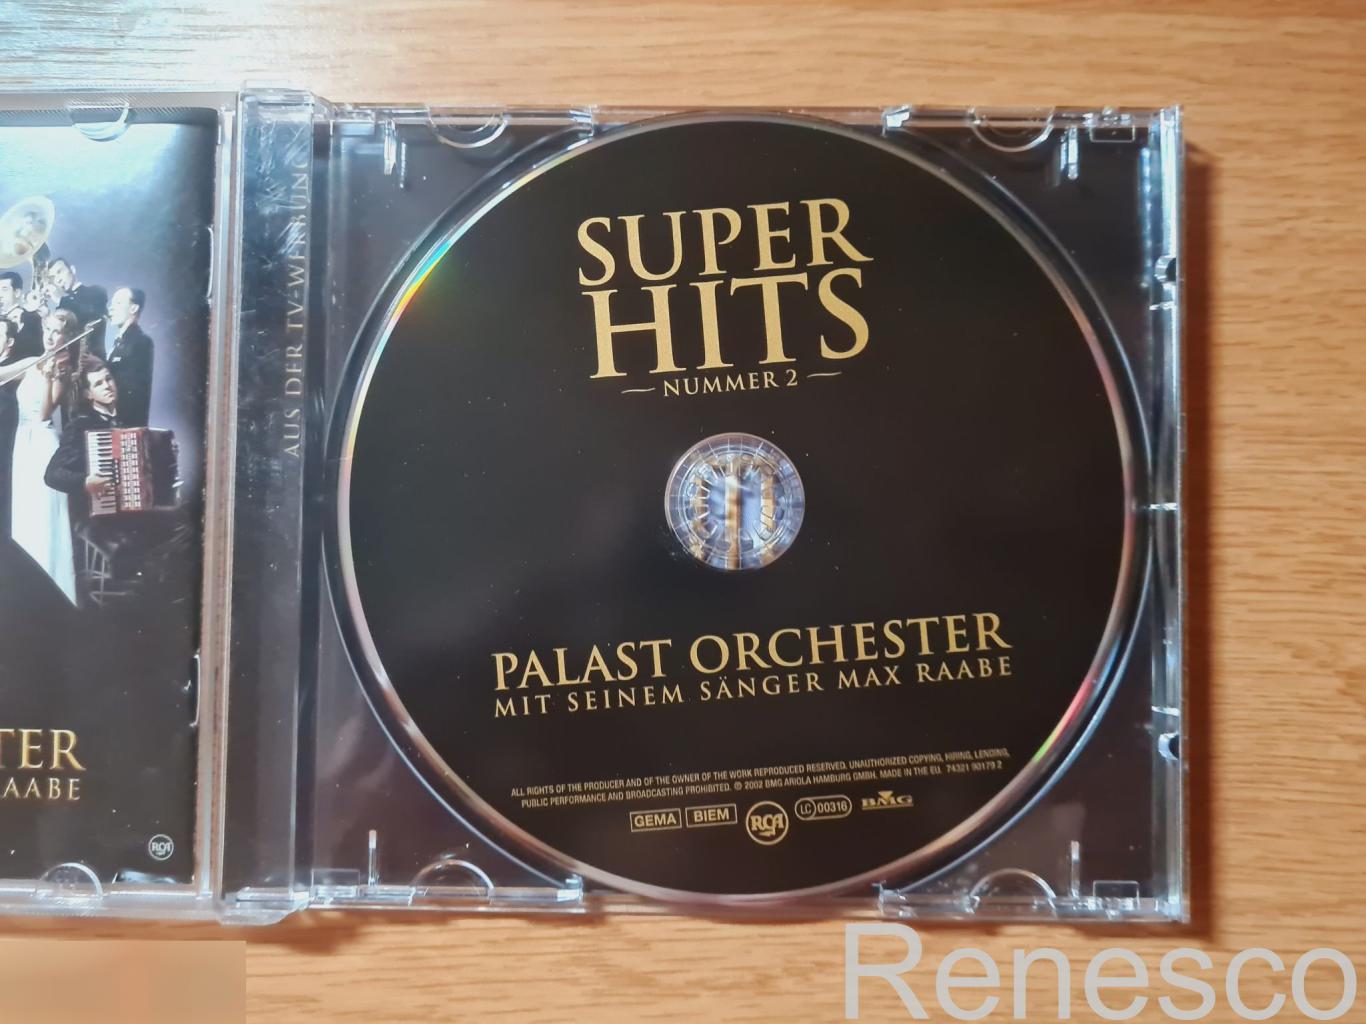 Palast Orchester Mit Seinem Sanger Max Raabe ?– Super Hits Nummer 2 (Europe) (20 4